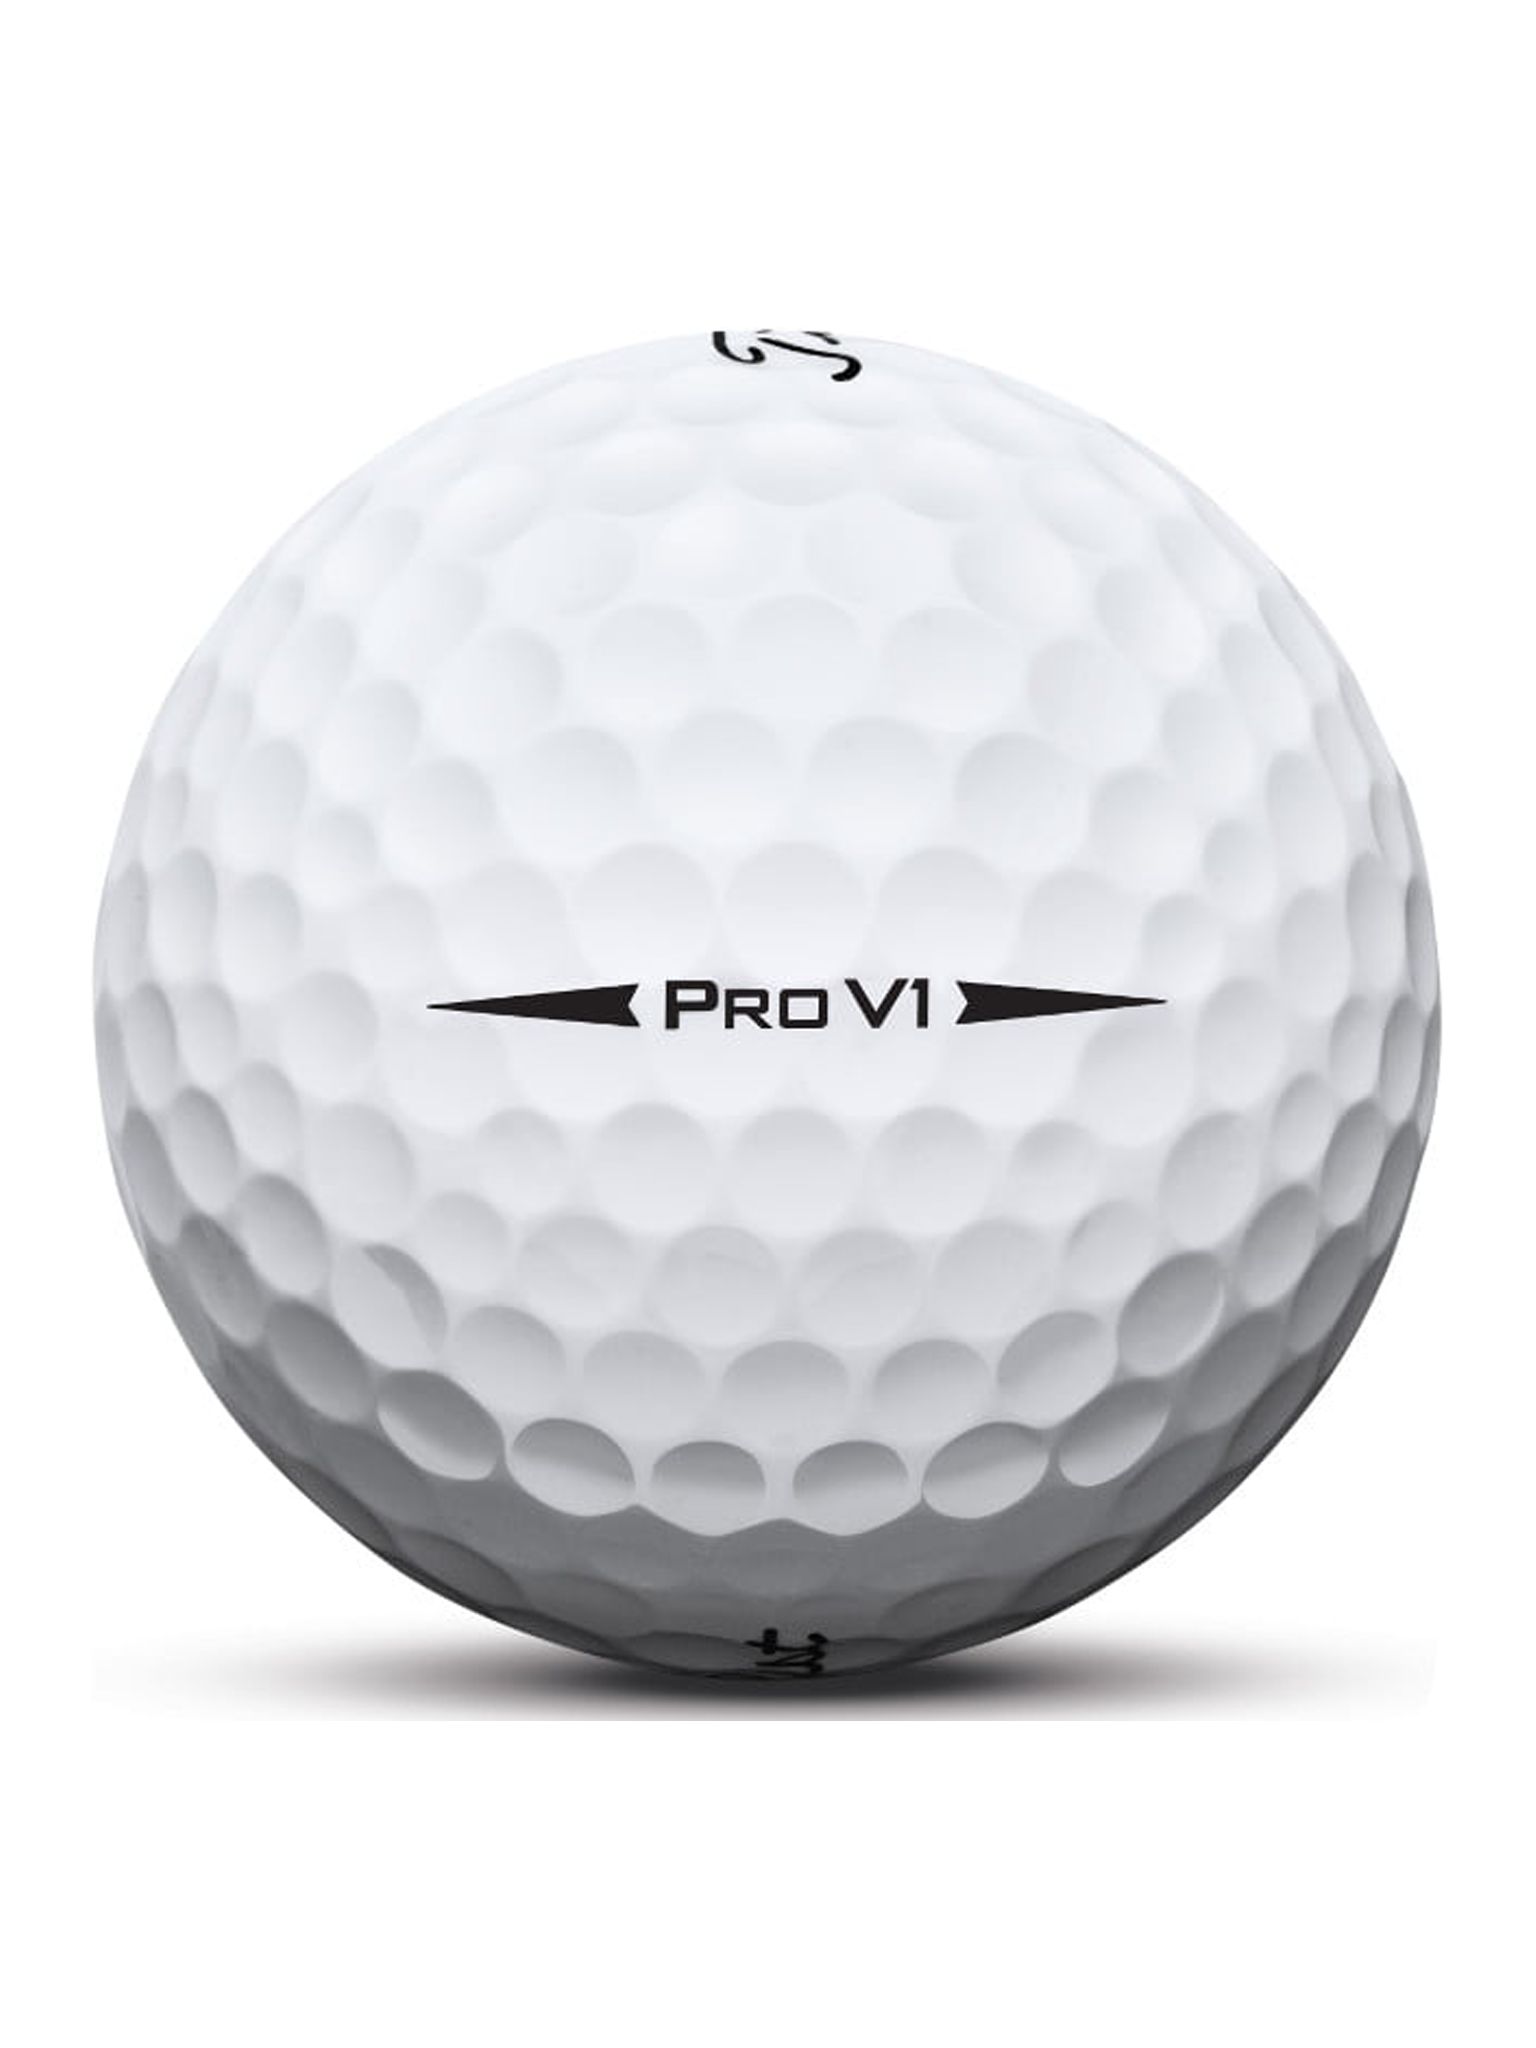 Titleist Pro V1 Golf Balls, Prior Generation, 12 Pack - image 5 of 5